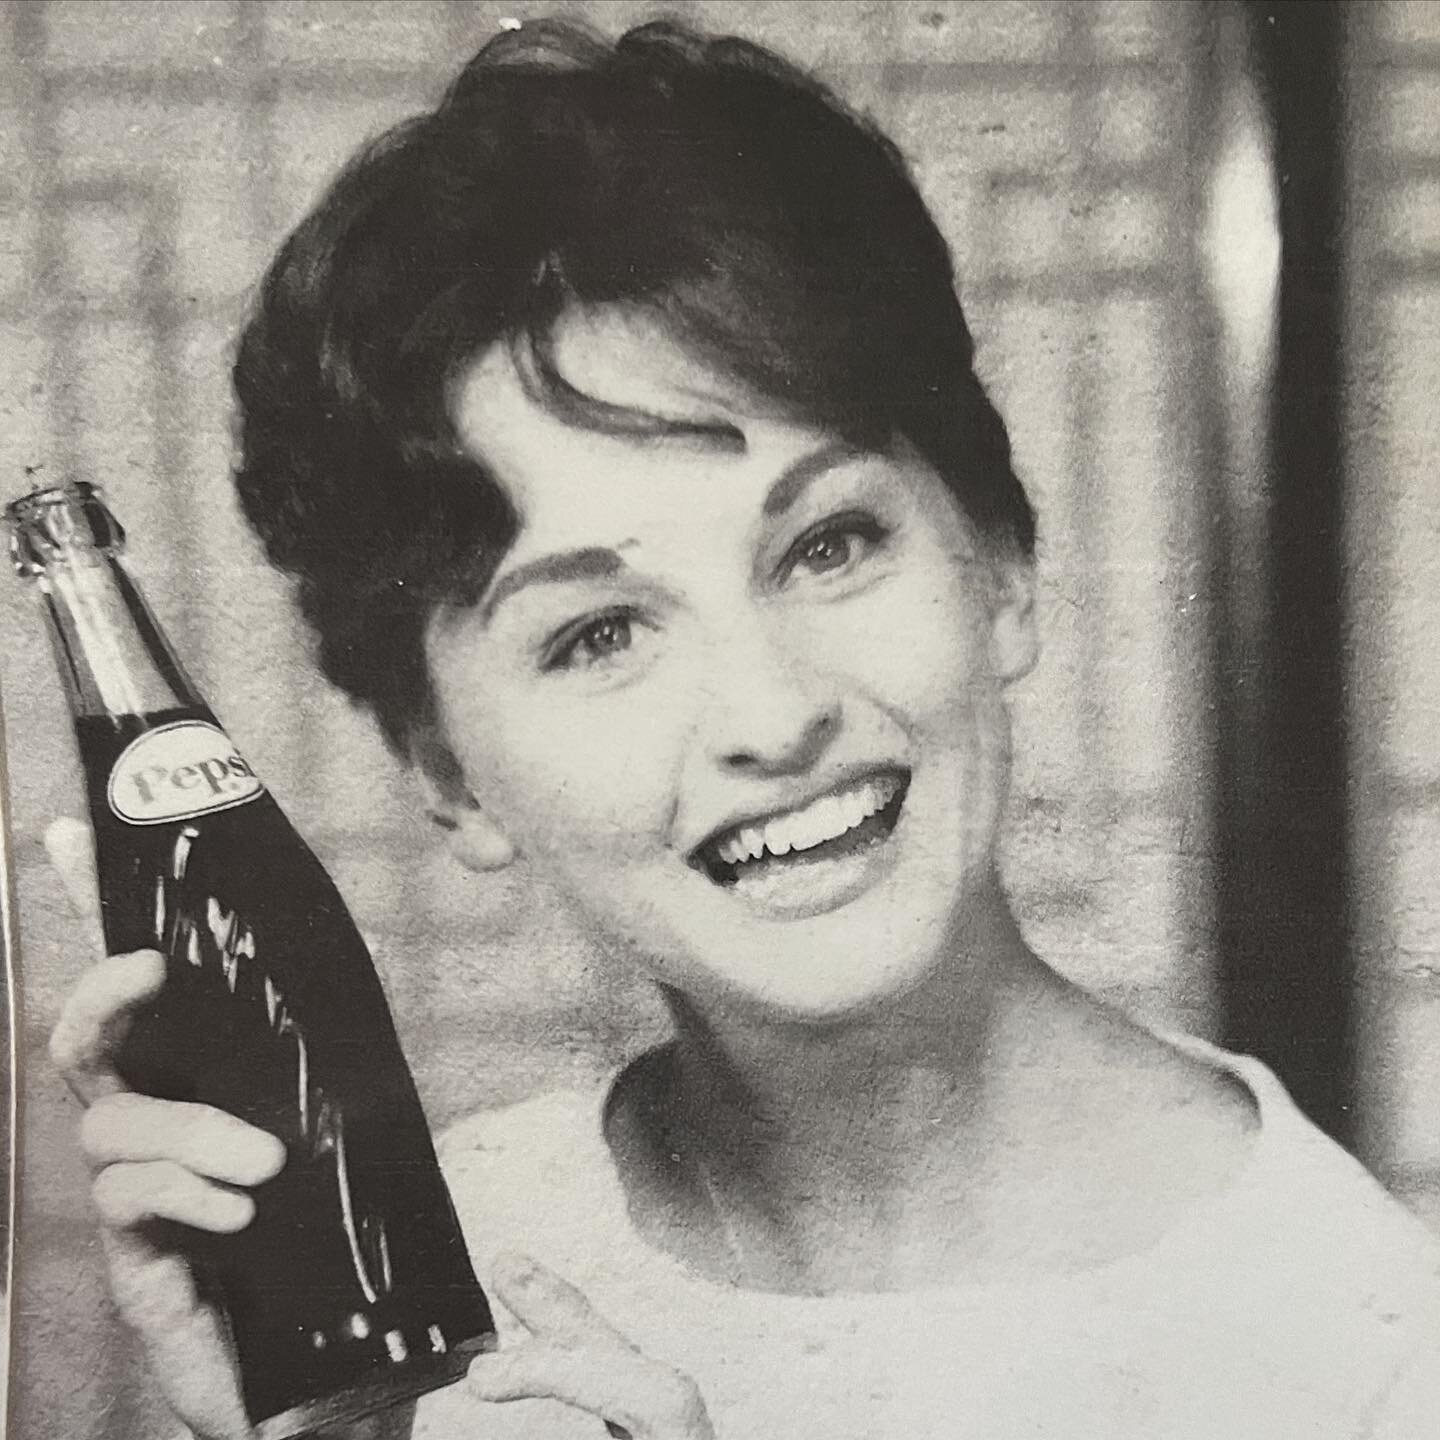 Mom in Pepsi advert. 1950&rsquo;s style! 
&bull;
&bull;
&bull;
&bull;
&bull;
&bull;
&bull;
#vintagestyle #vintageads #beautyqueen #smile #pepsi